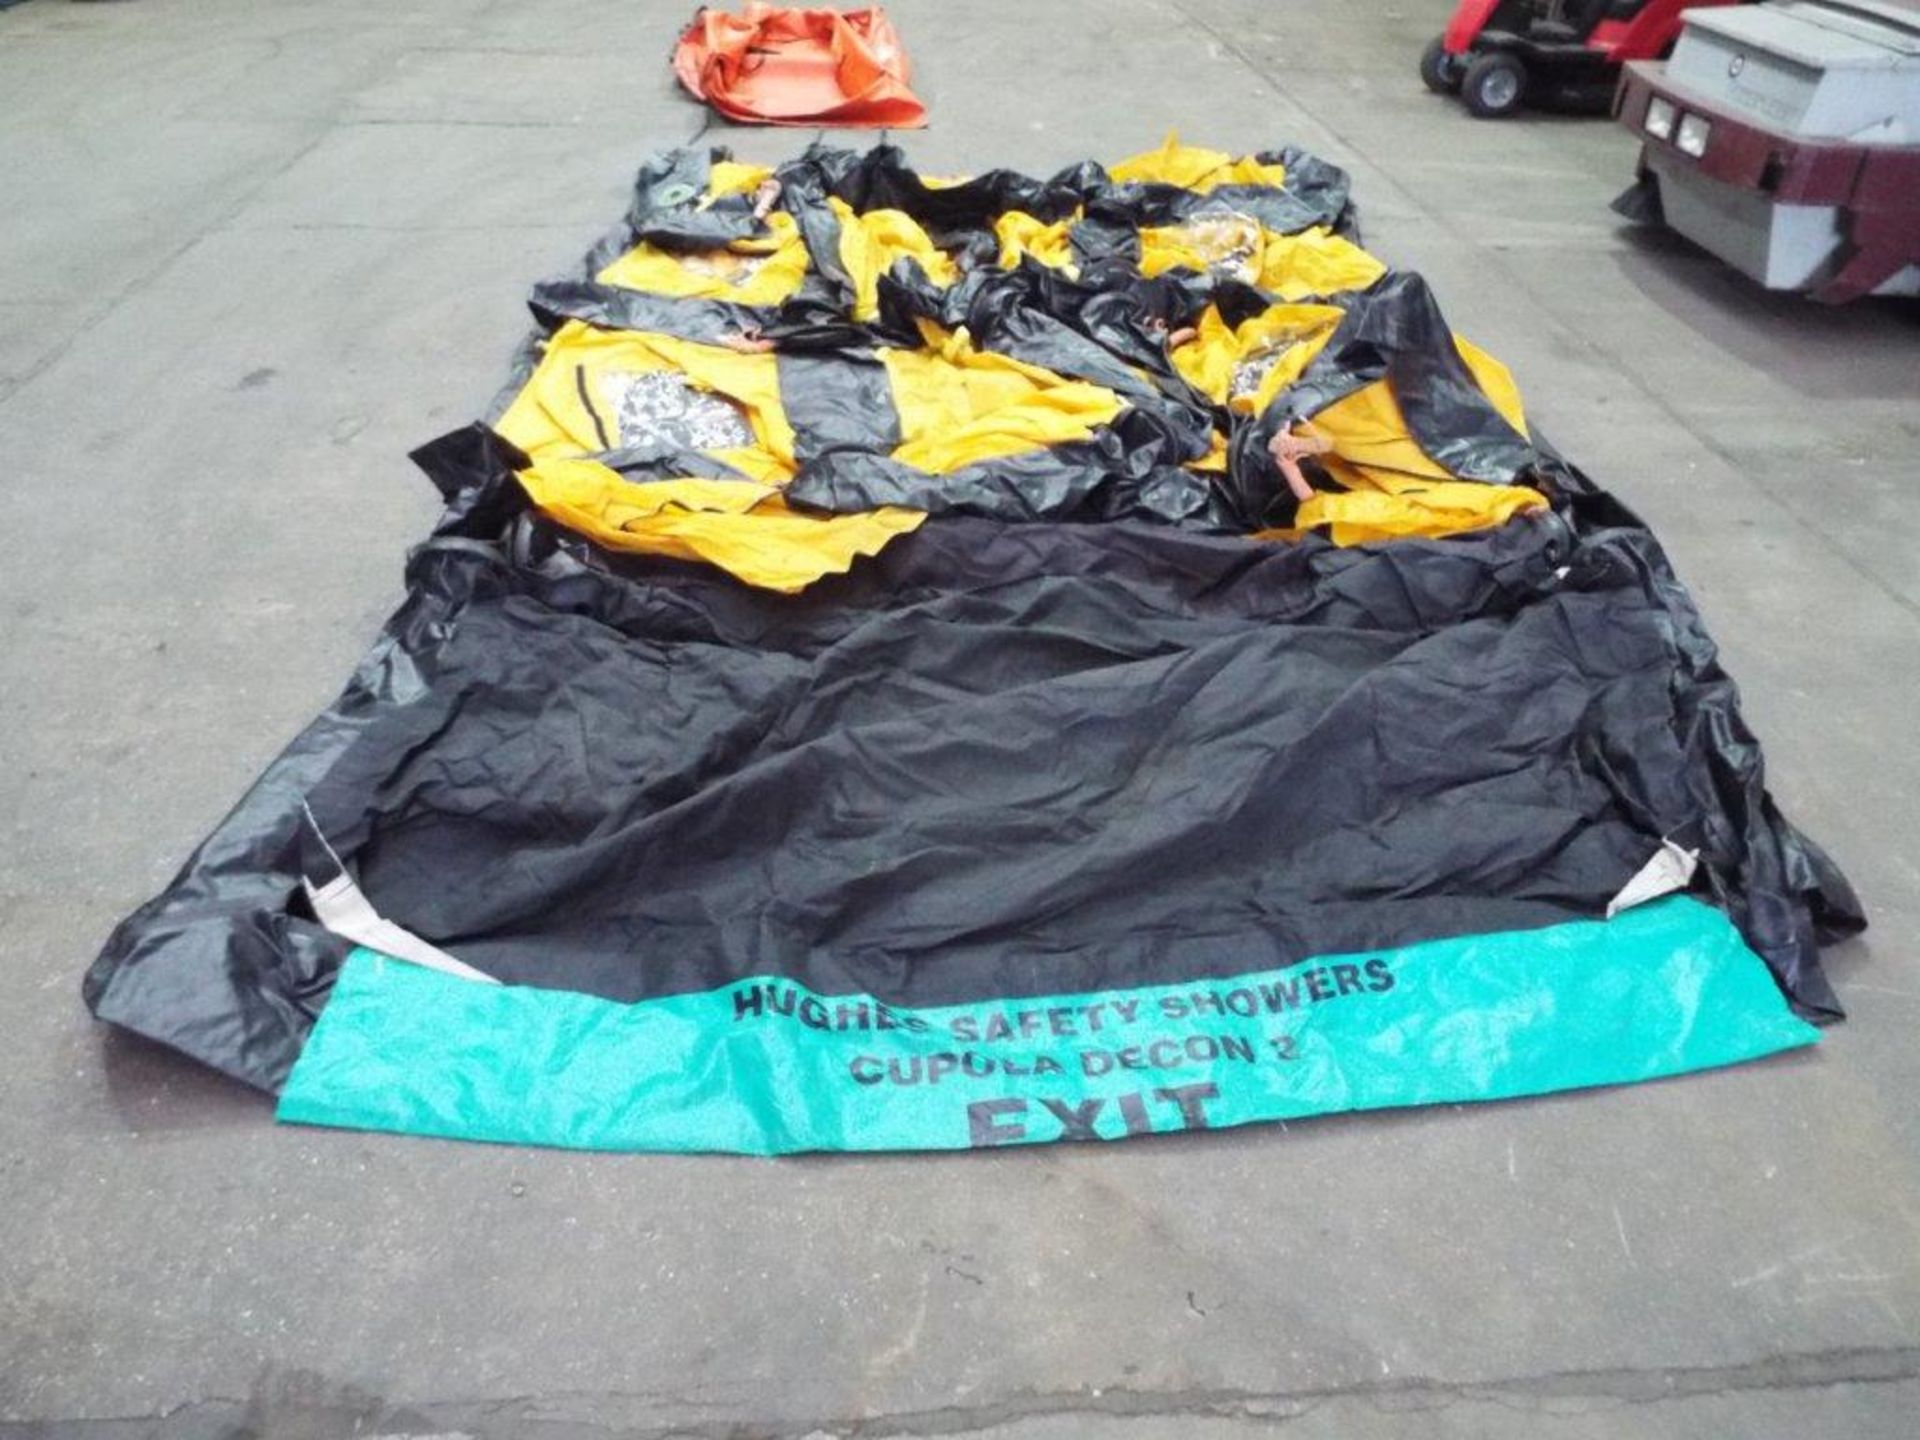 Hughes Decon 2 Inflatable Decontamination Shower Unit - Image 2 of 12